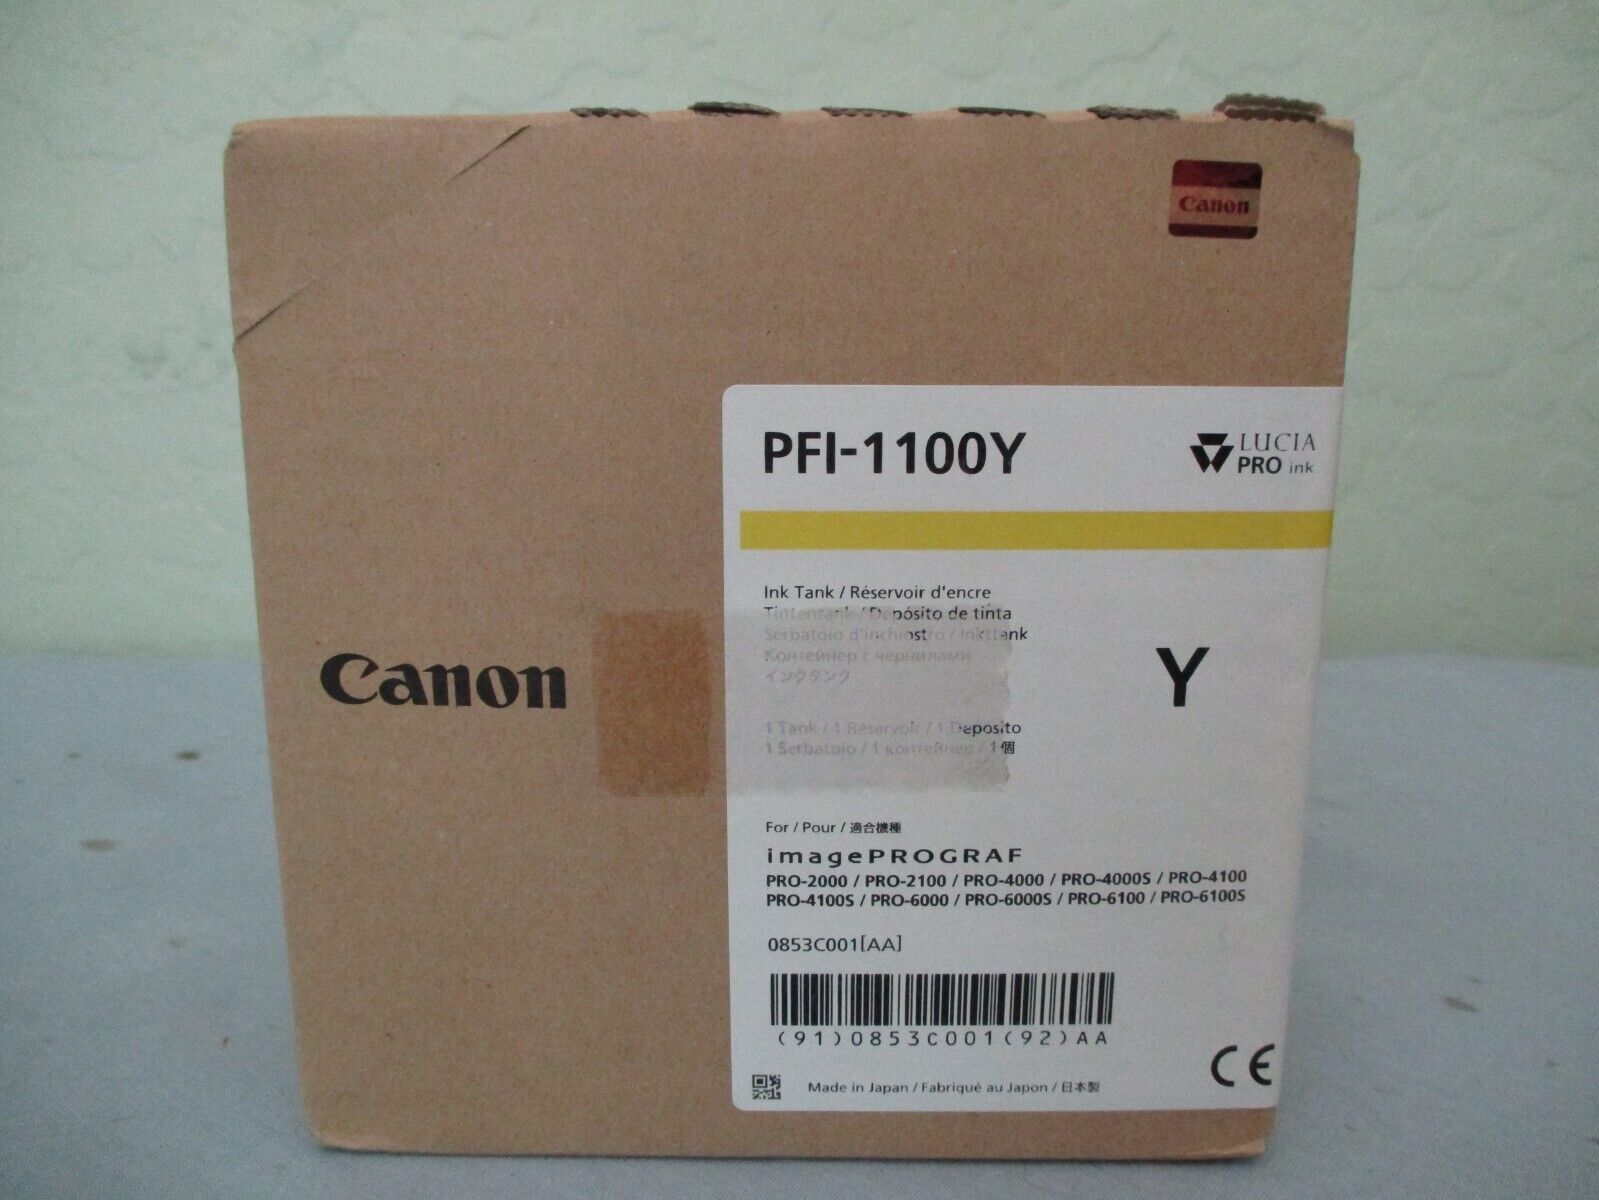 Genuine Canon ImagePROGRAF Pro-2000, Pro-2100 Pro-4000 PFI-1100Y Yellow Ink Tank